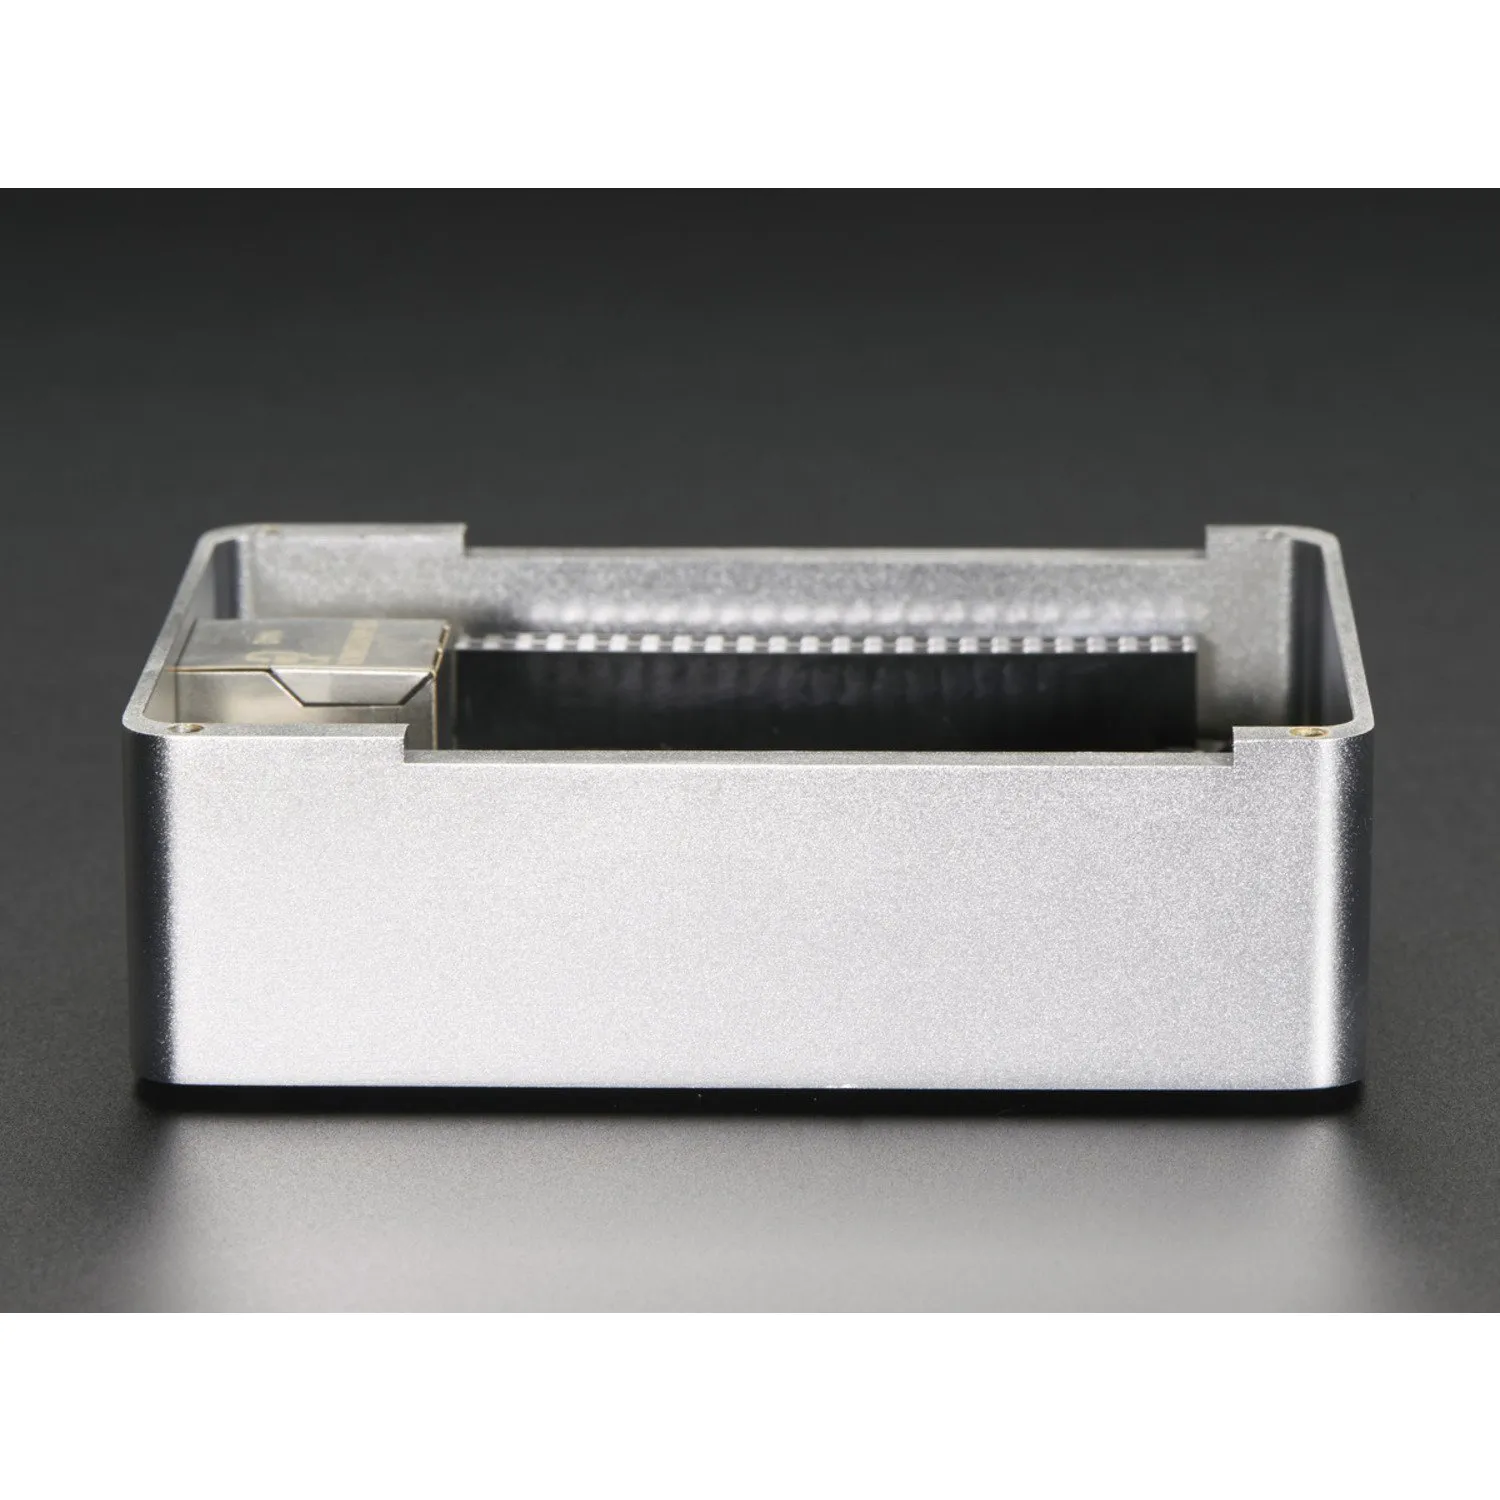 Photo of Anidees BeagleBoneBlack Case - Silver Aluminum with Crystal Top